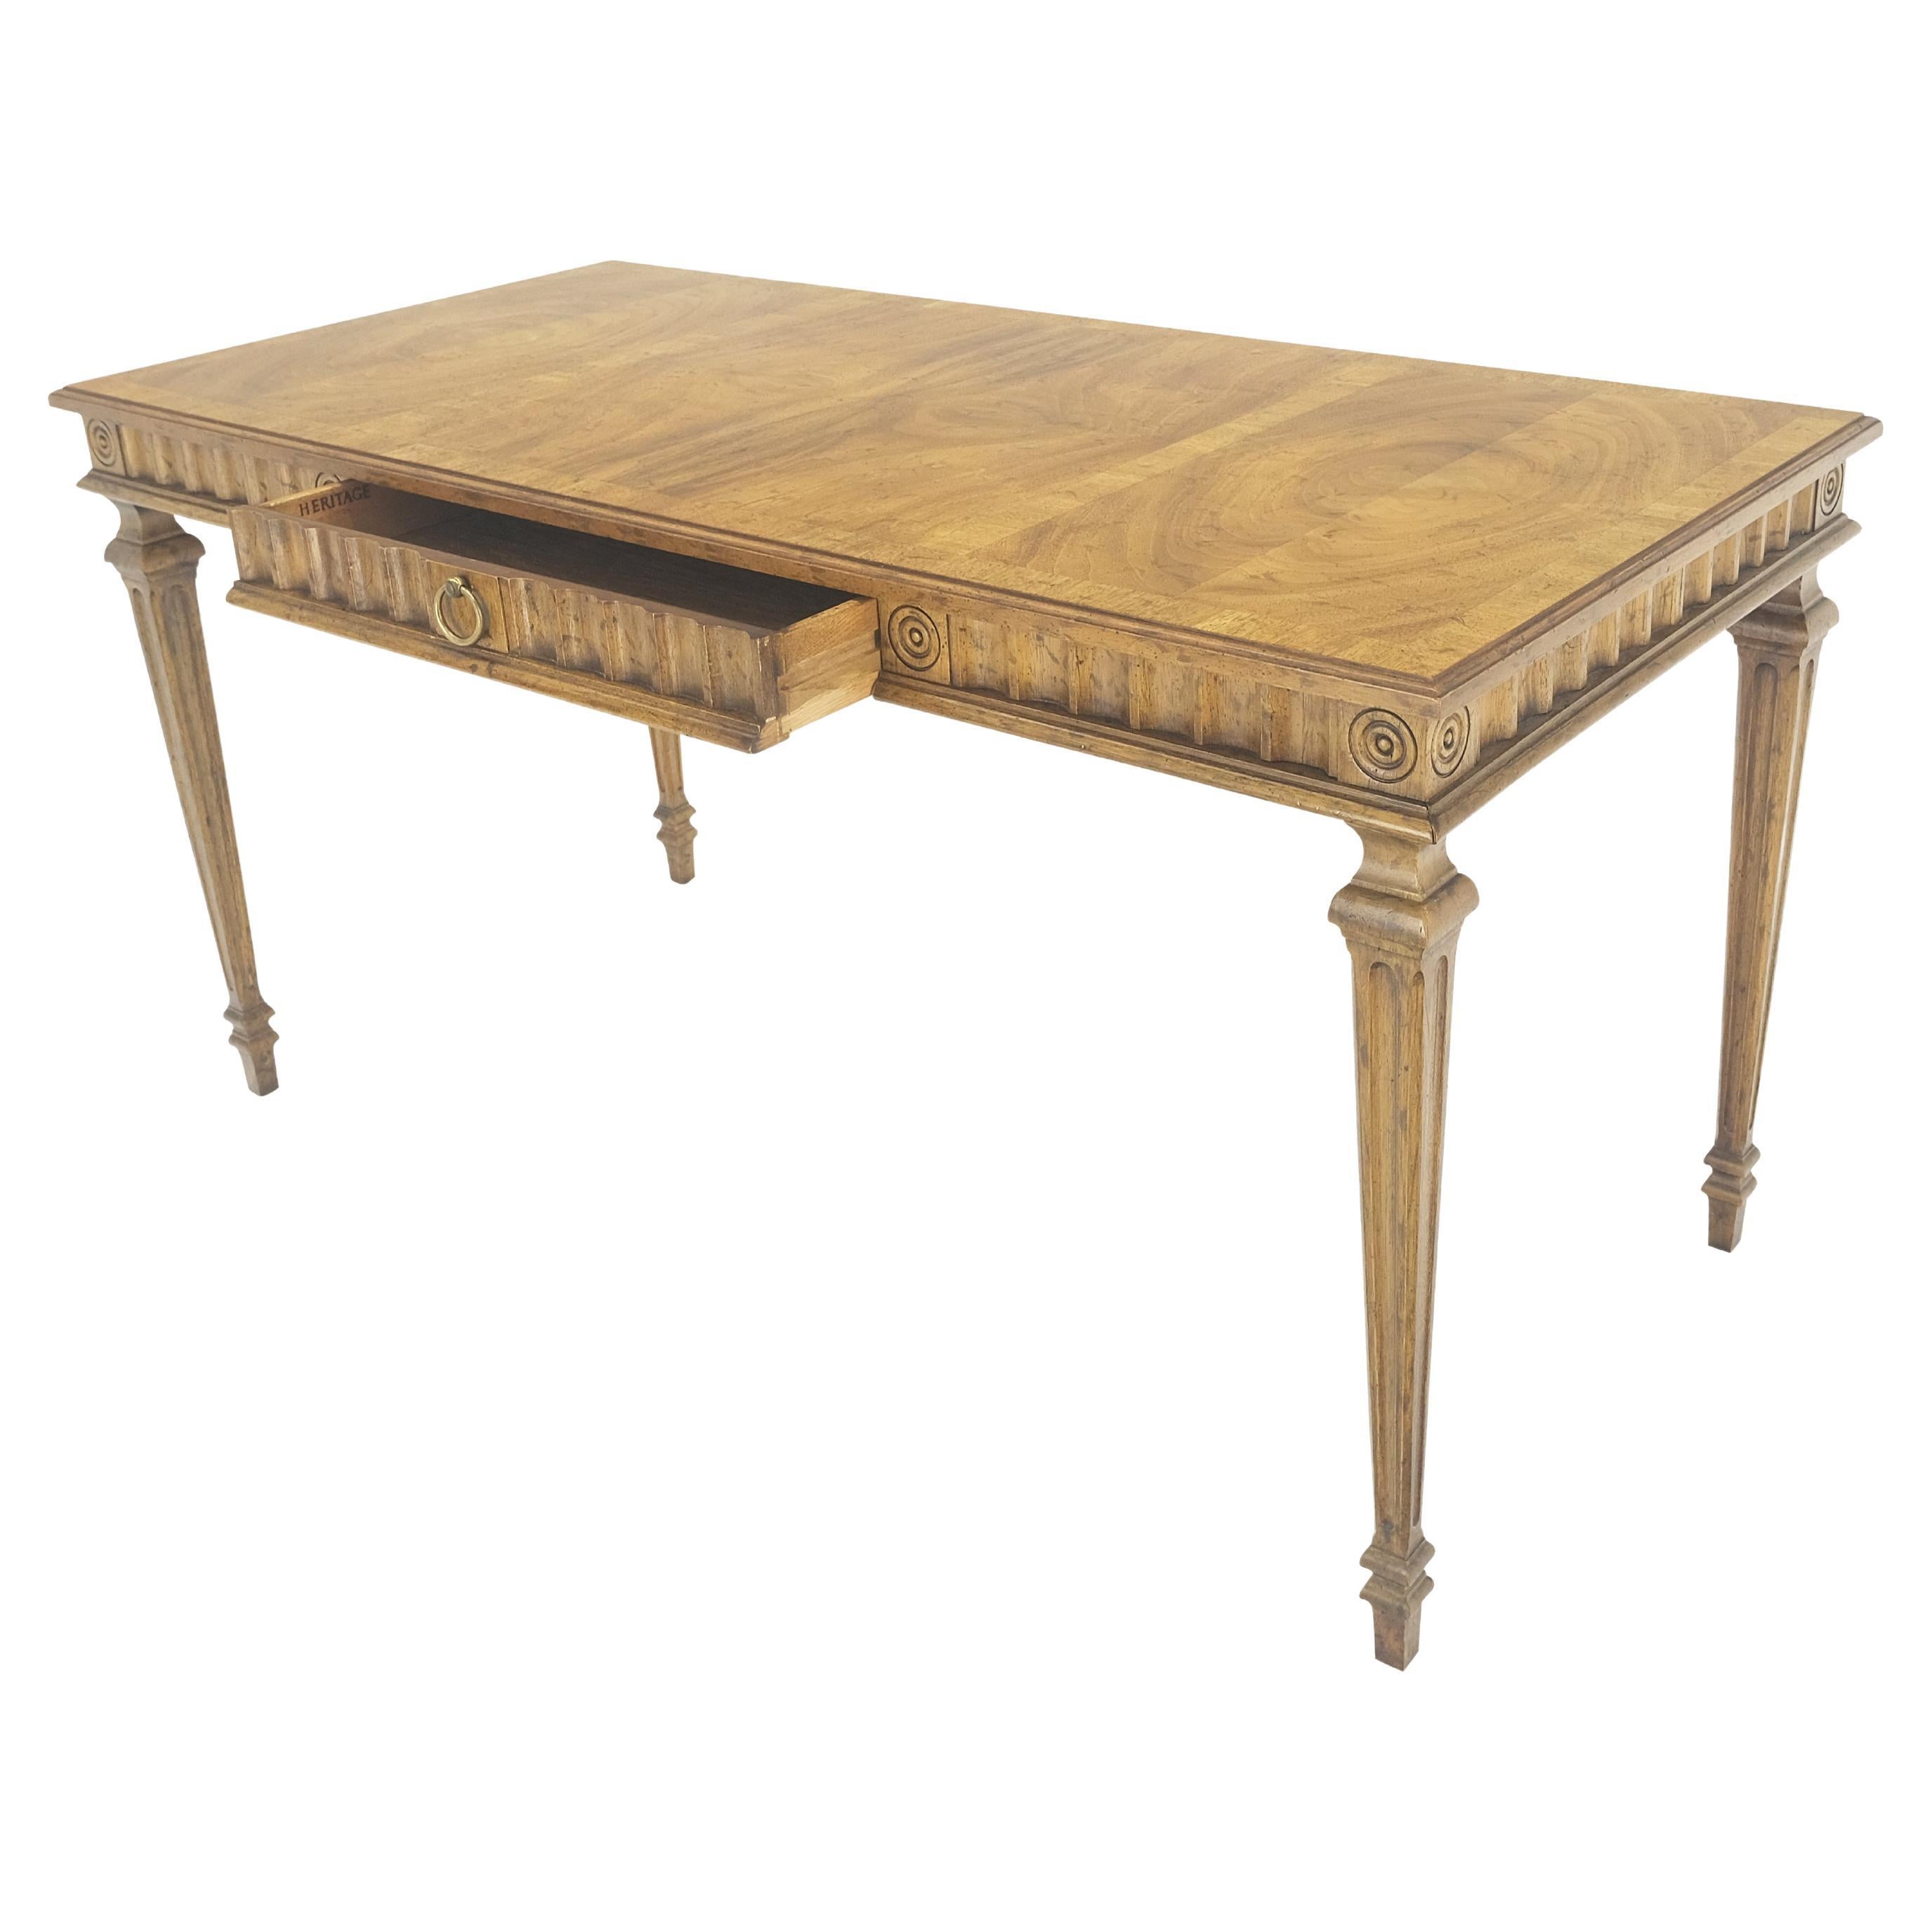 Heritage Henredon Scalloped Edge Olive Burl Wood Top Desk One Drawer Table MINT!